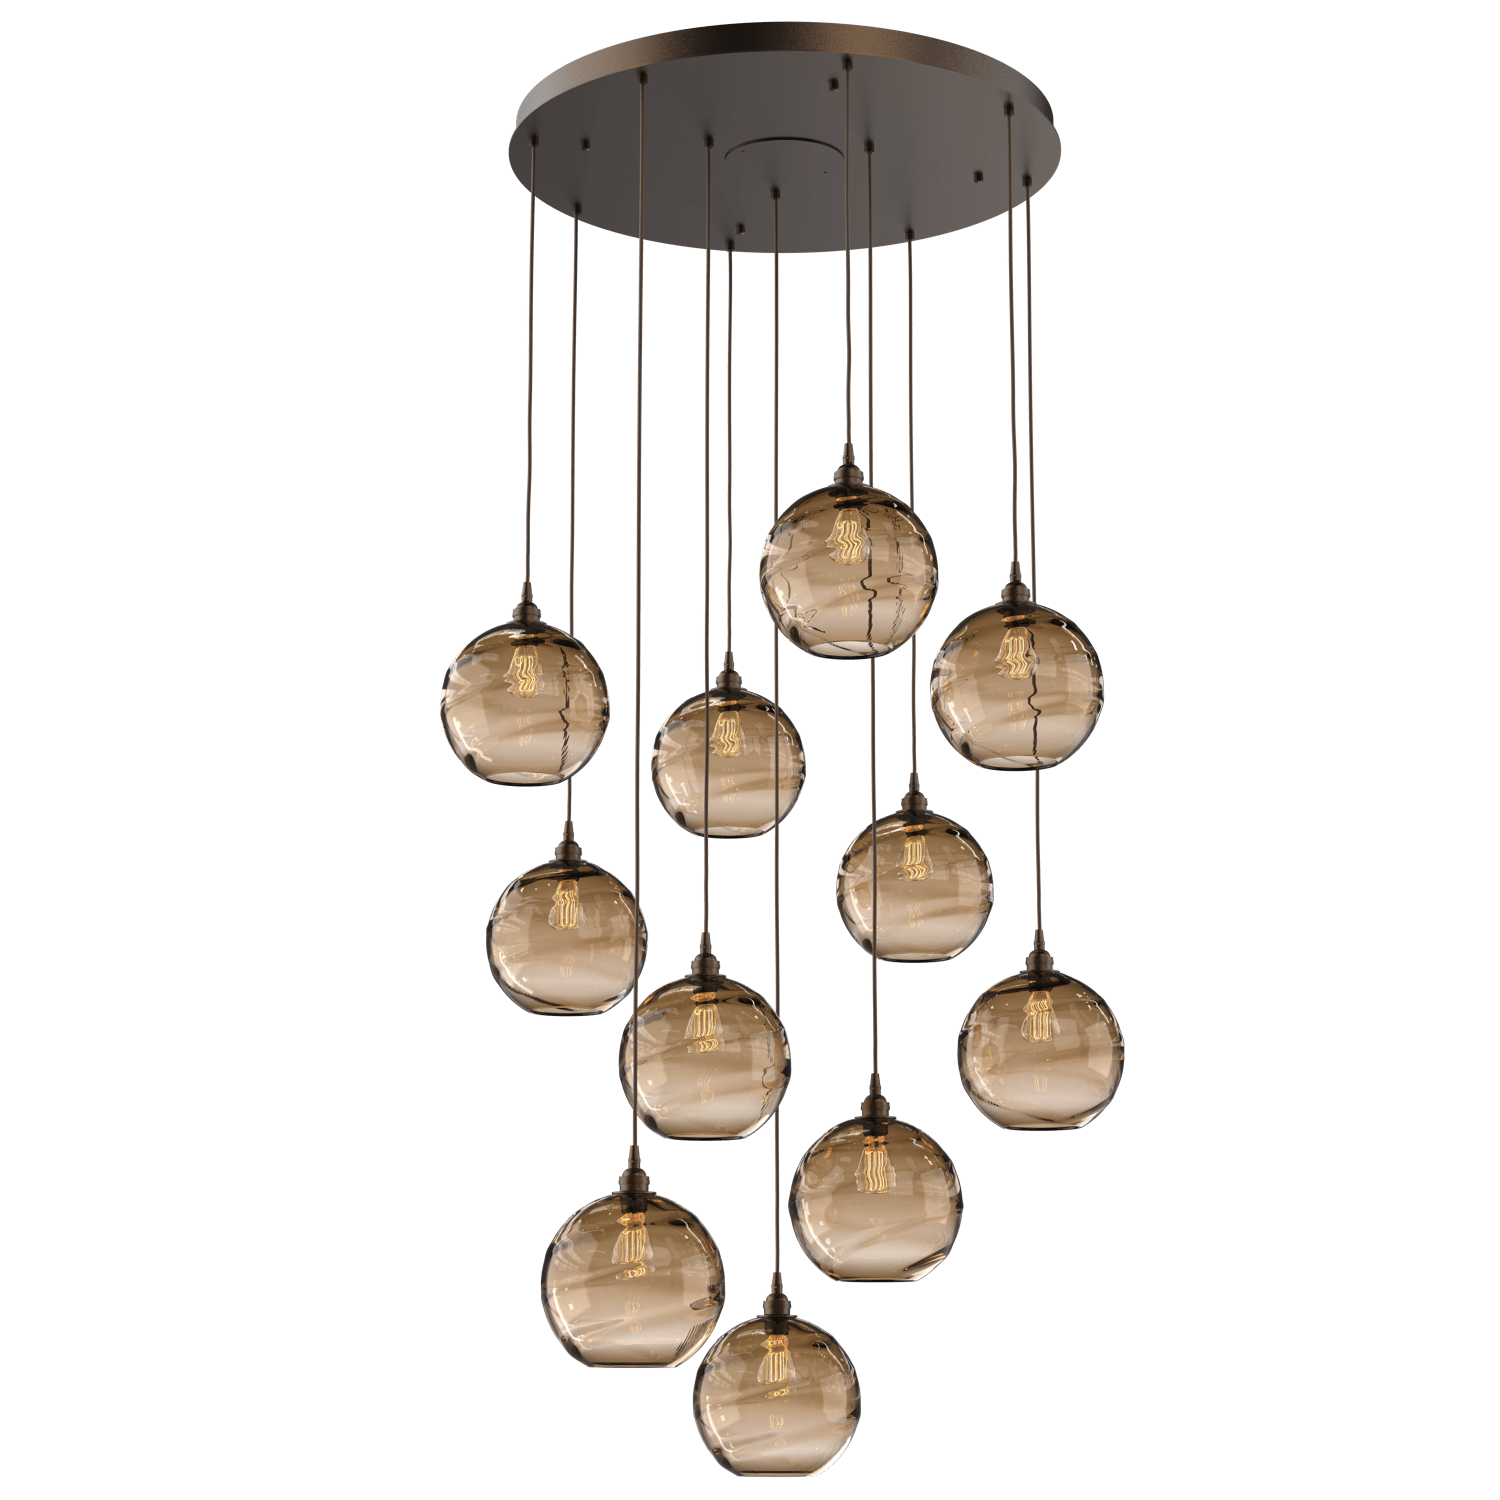 CHB0047-11-FB-OB-Hammerton-Studio-Optic-Blown-Glass-Terra-11-light-round-pendant-chandelier-with-flat-bronze-finish-and-optic-bronze-blown-glass-shades-and-incandescent-lamping